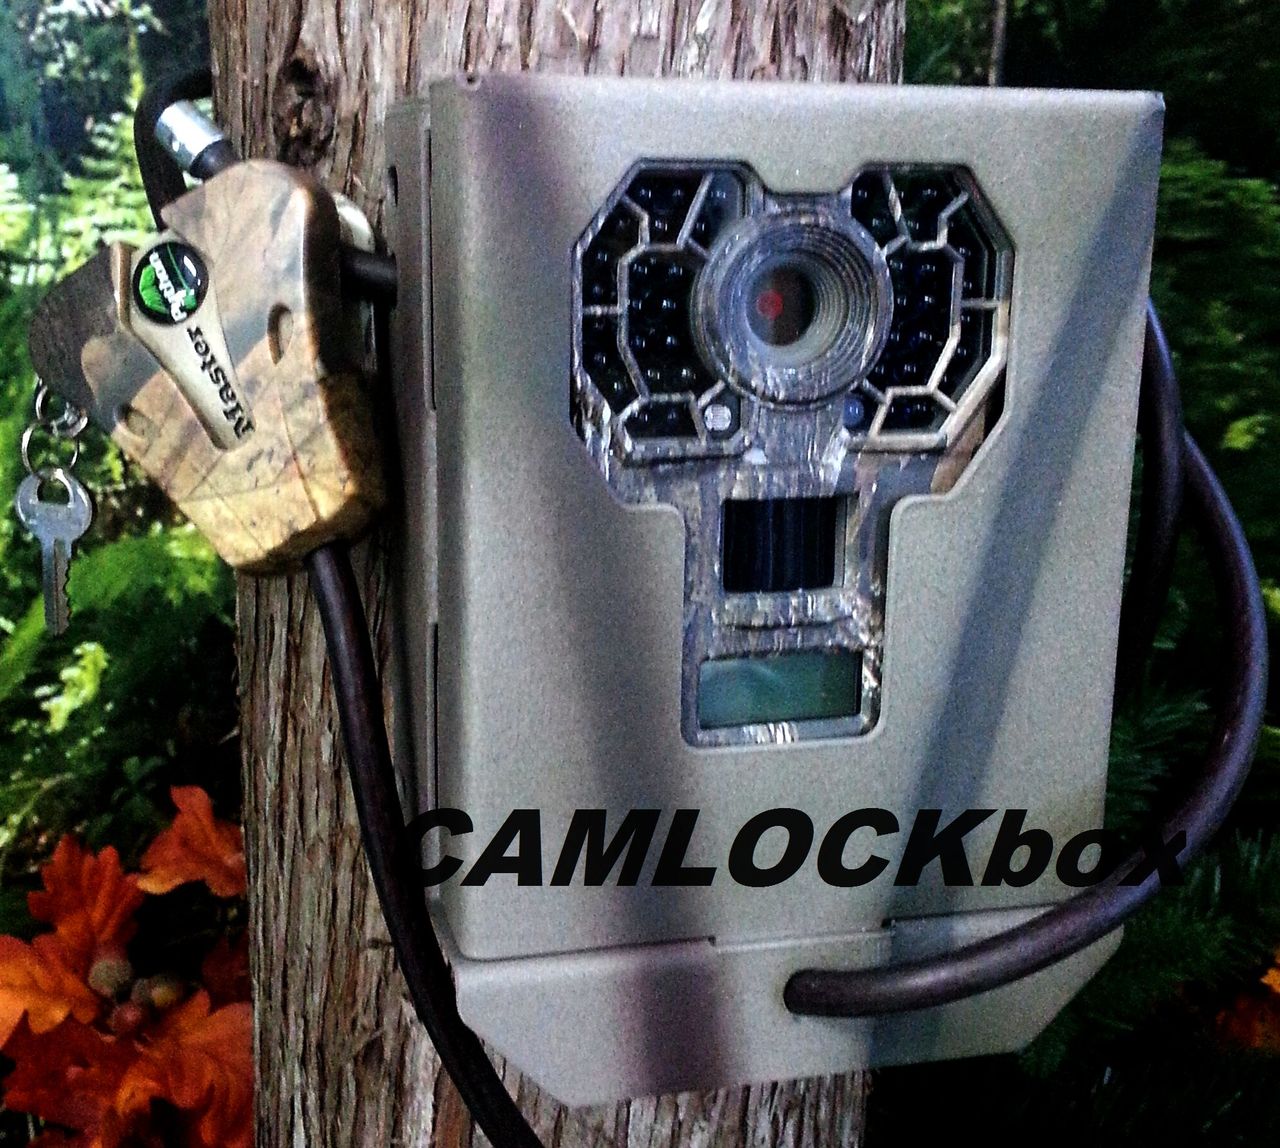 http://camlockbox.com.148-62-23-244.leinteractive.com/wp-content/uploads/2021/03/Stealth_Cam_G30_G42NG_Security_Box_2__93044.jpg